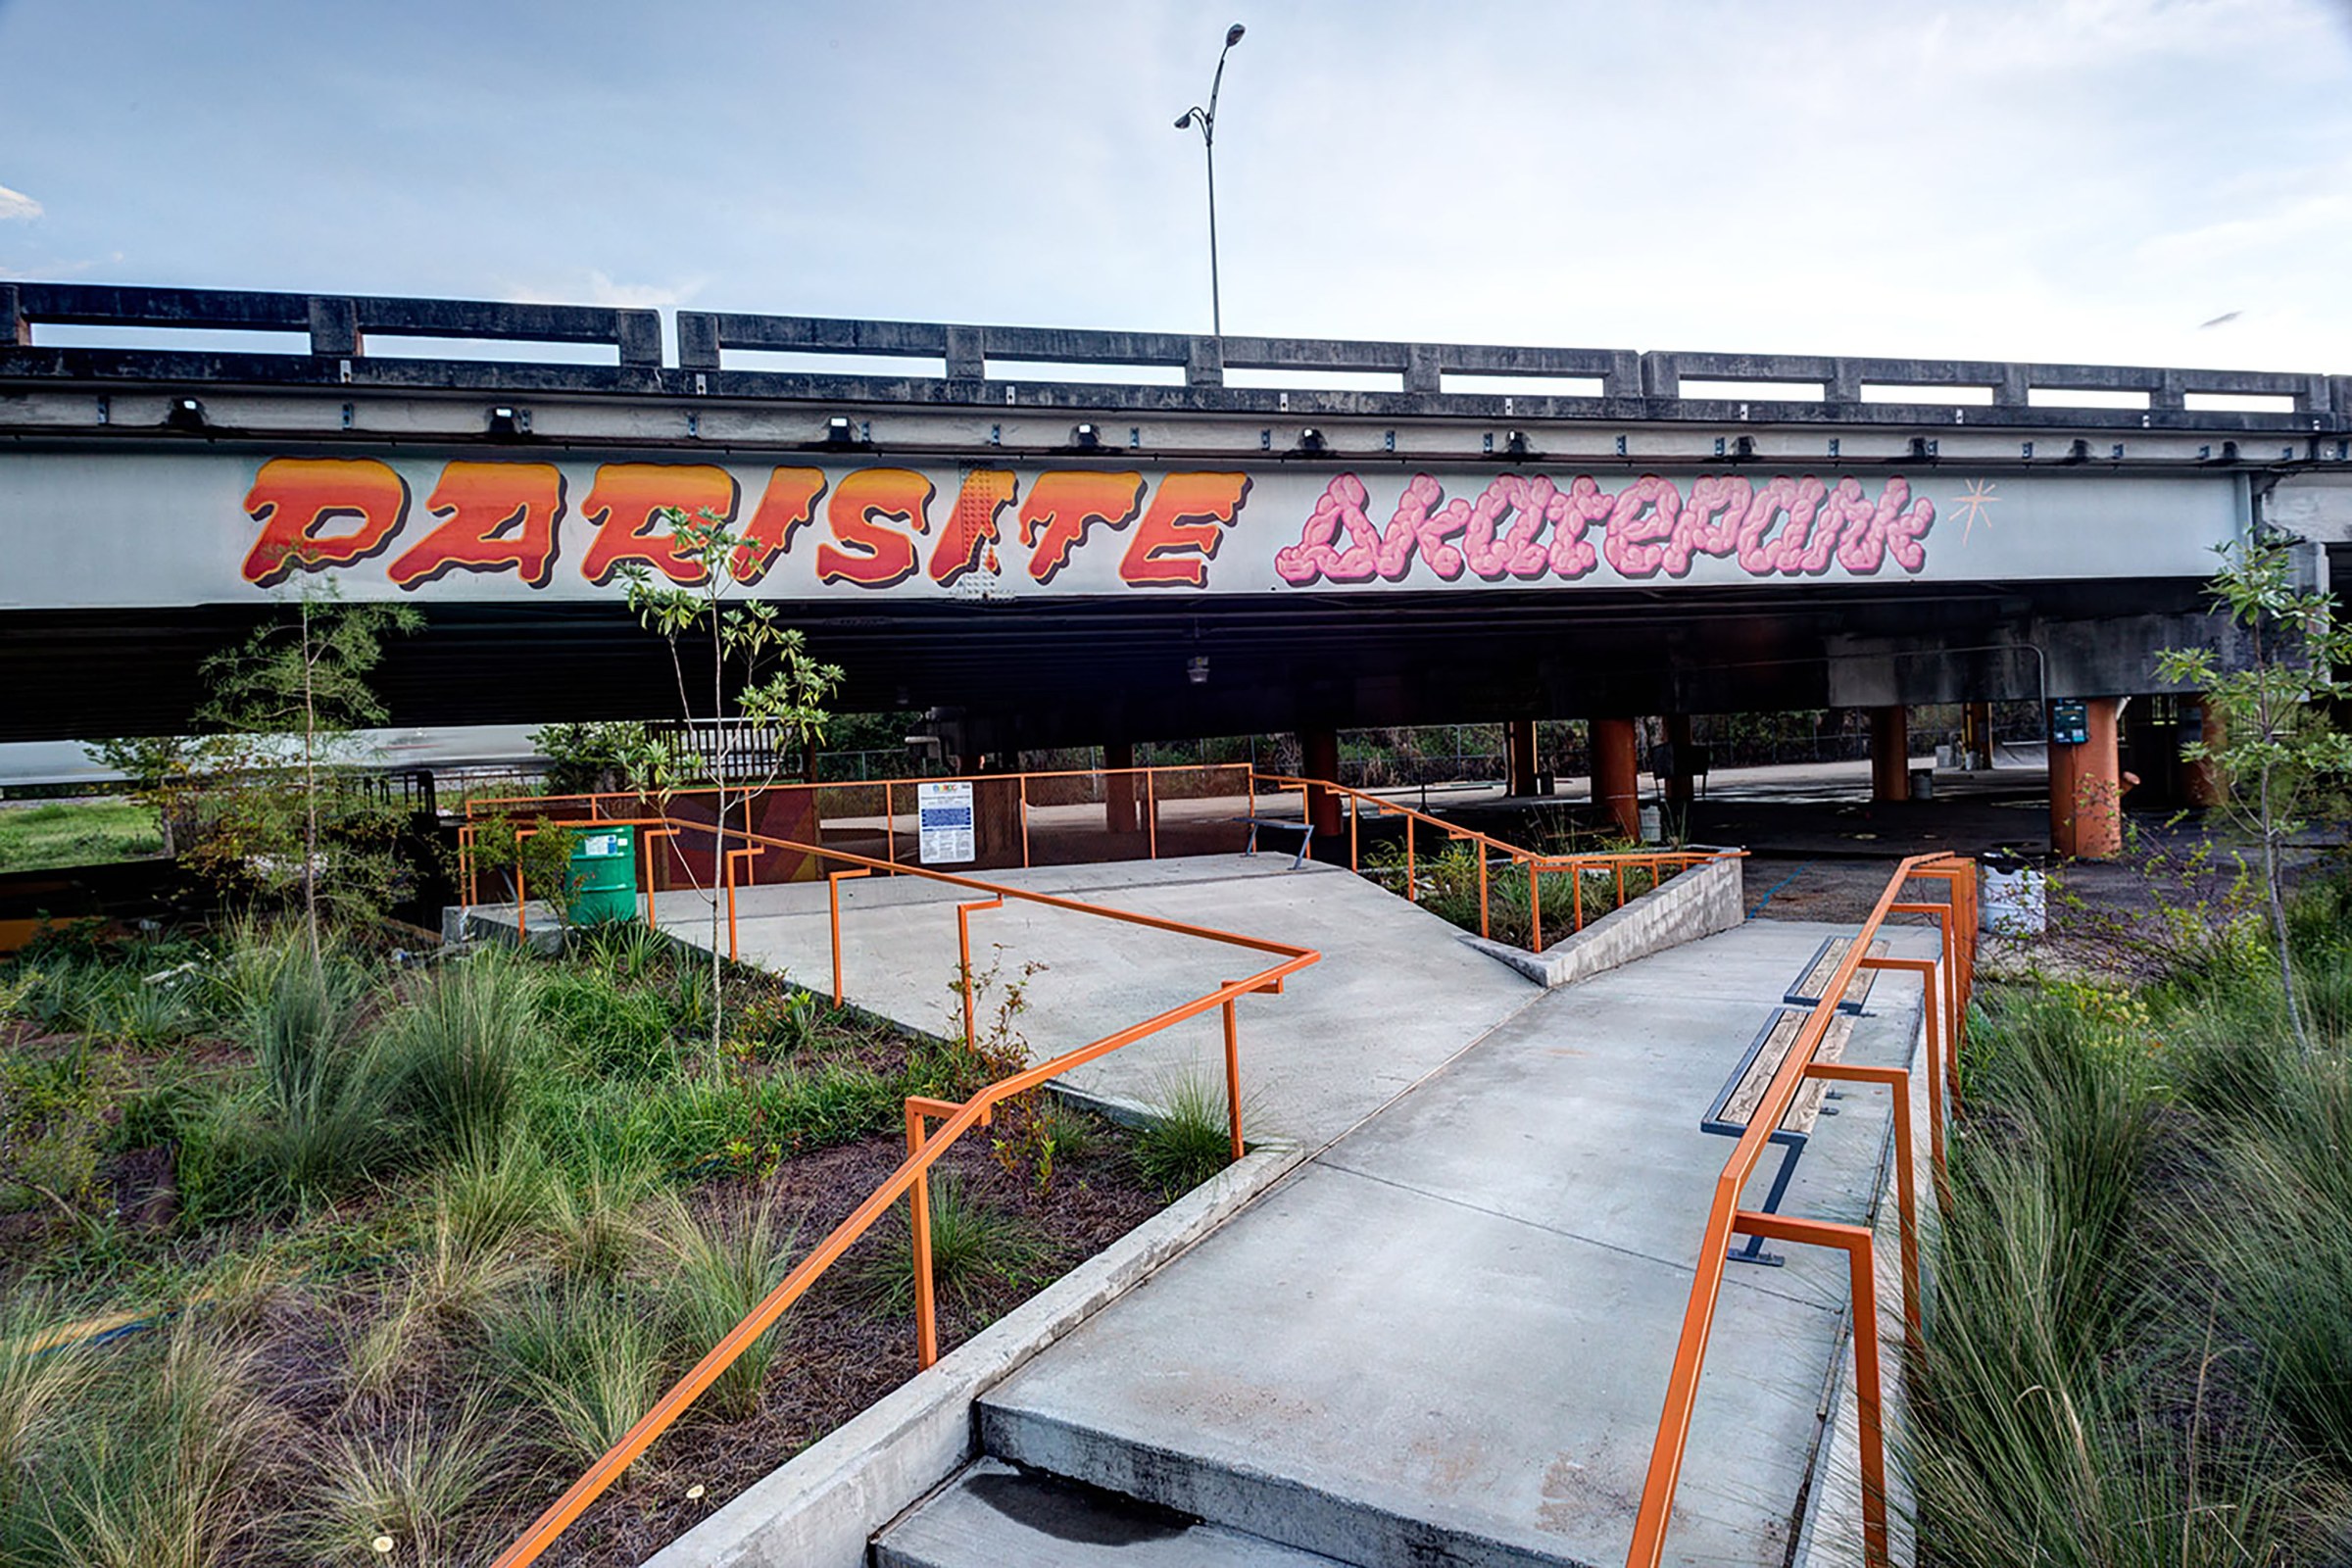 Photo of Parasite Skatepark with orange railings and greenery